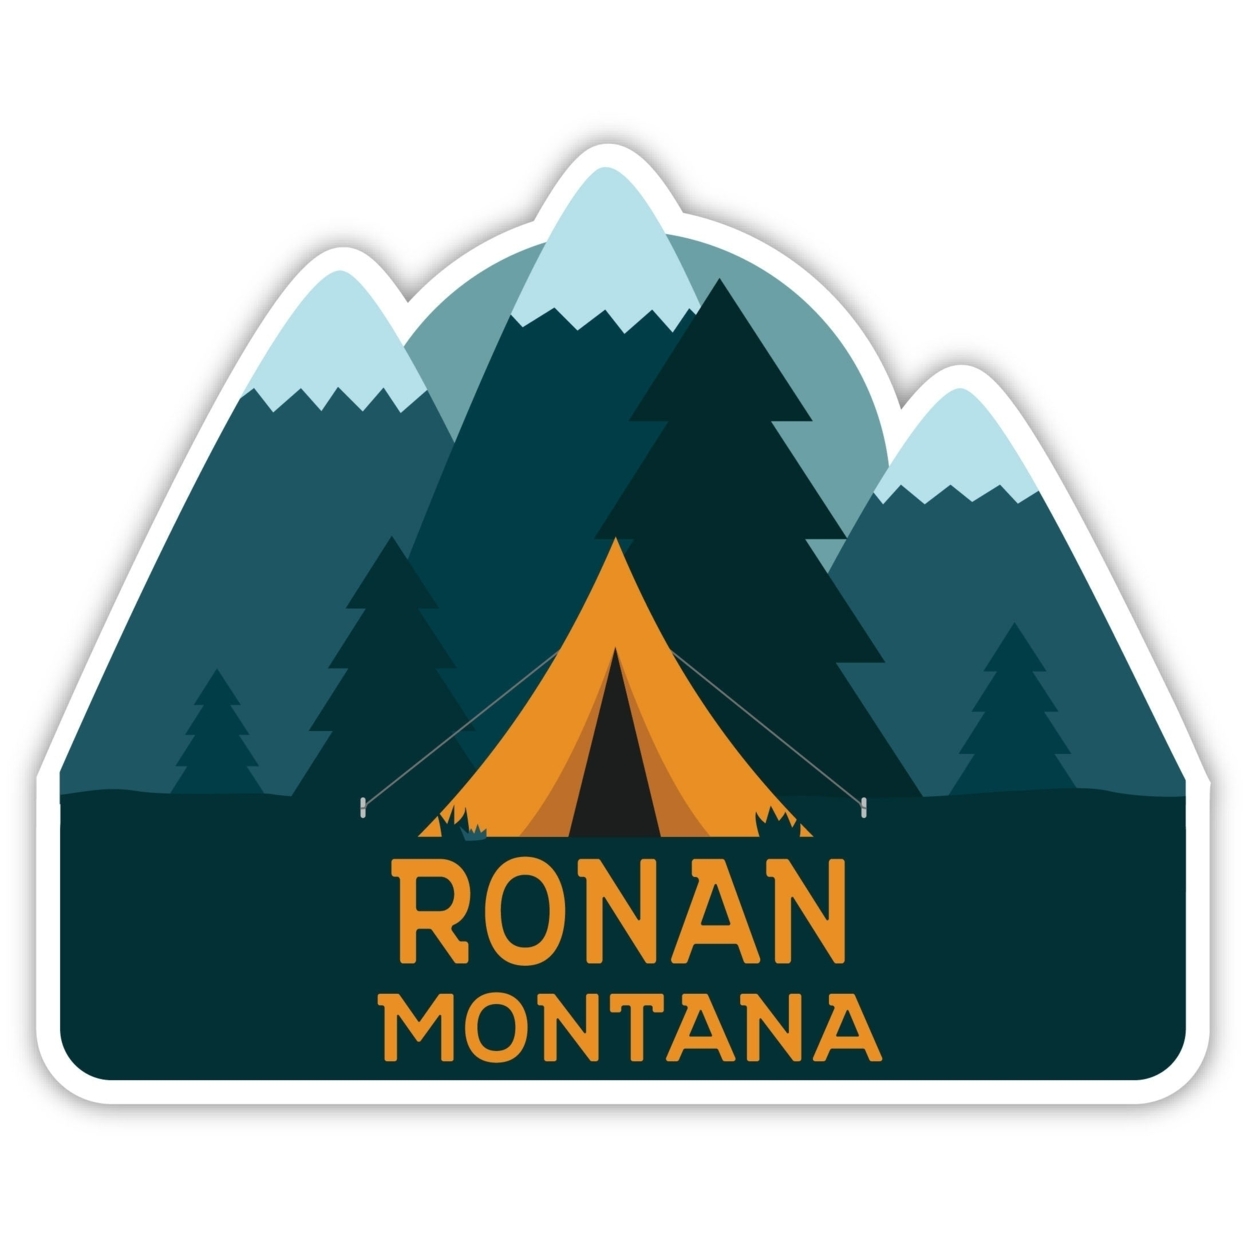 Ronan Montana Souvenir Decorative Stickers (Choose Theme And Size) - Single Unit, 4-Inch, Tent